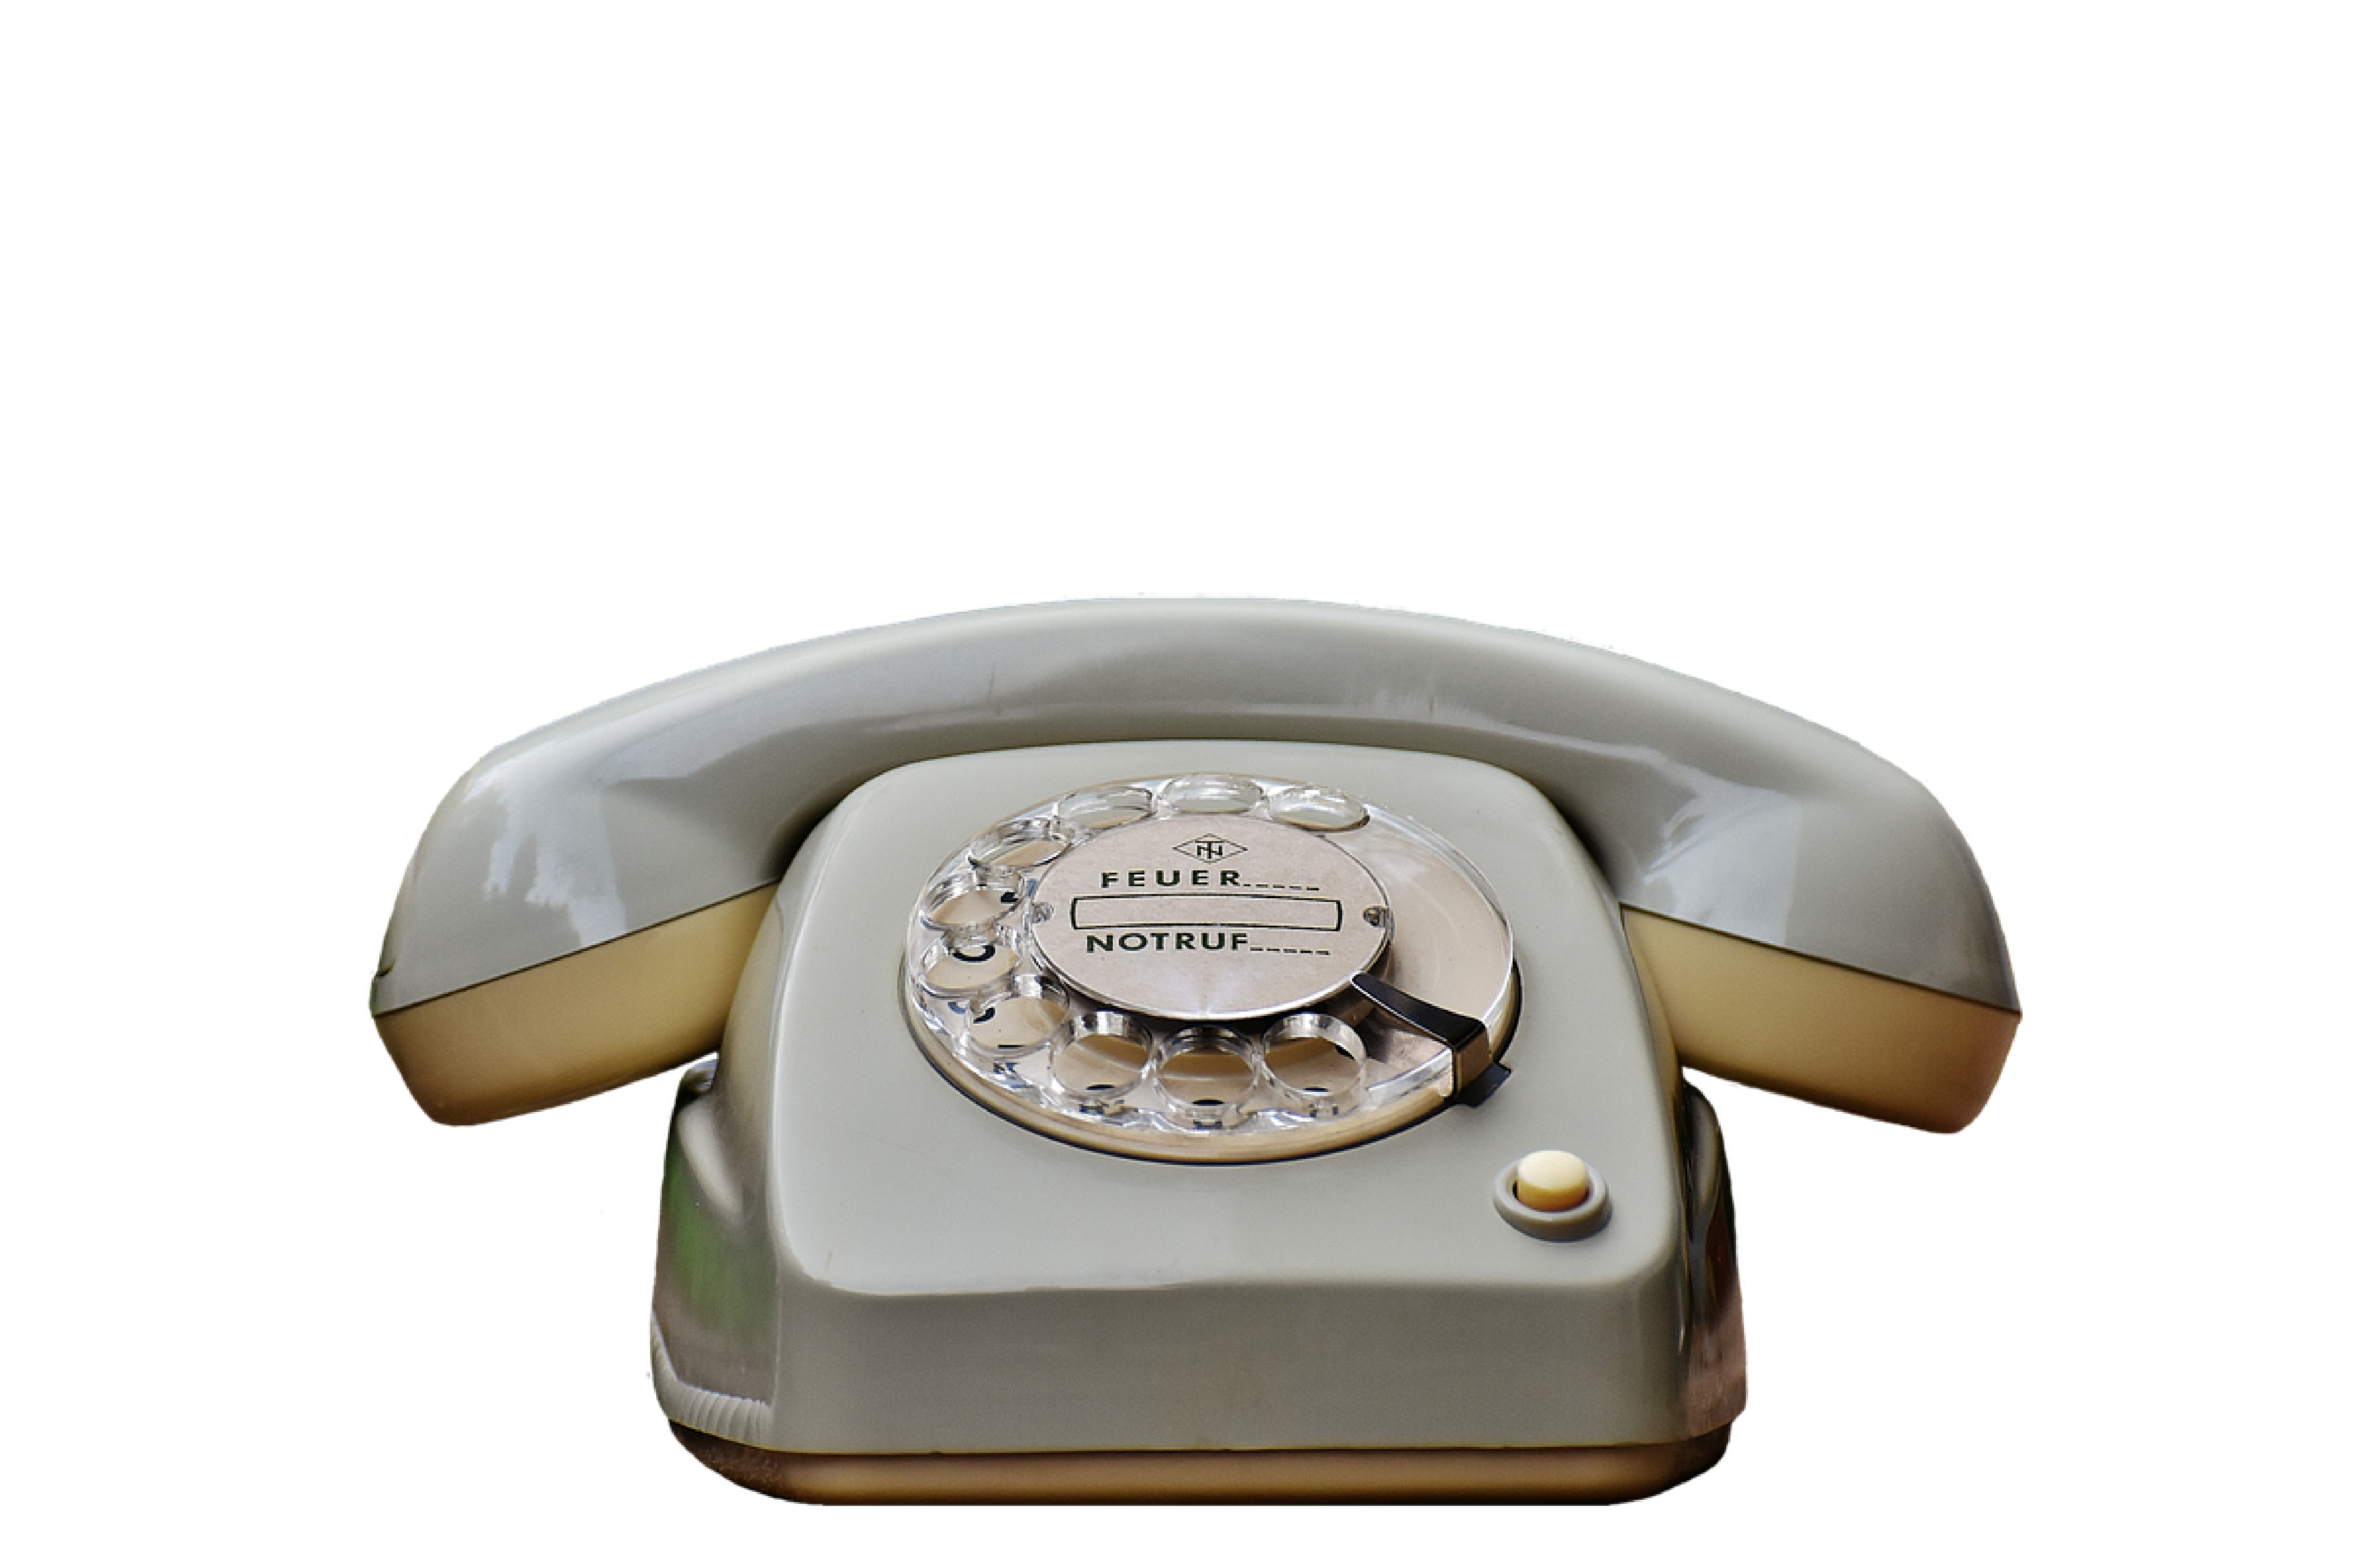 Bureau44 phone